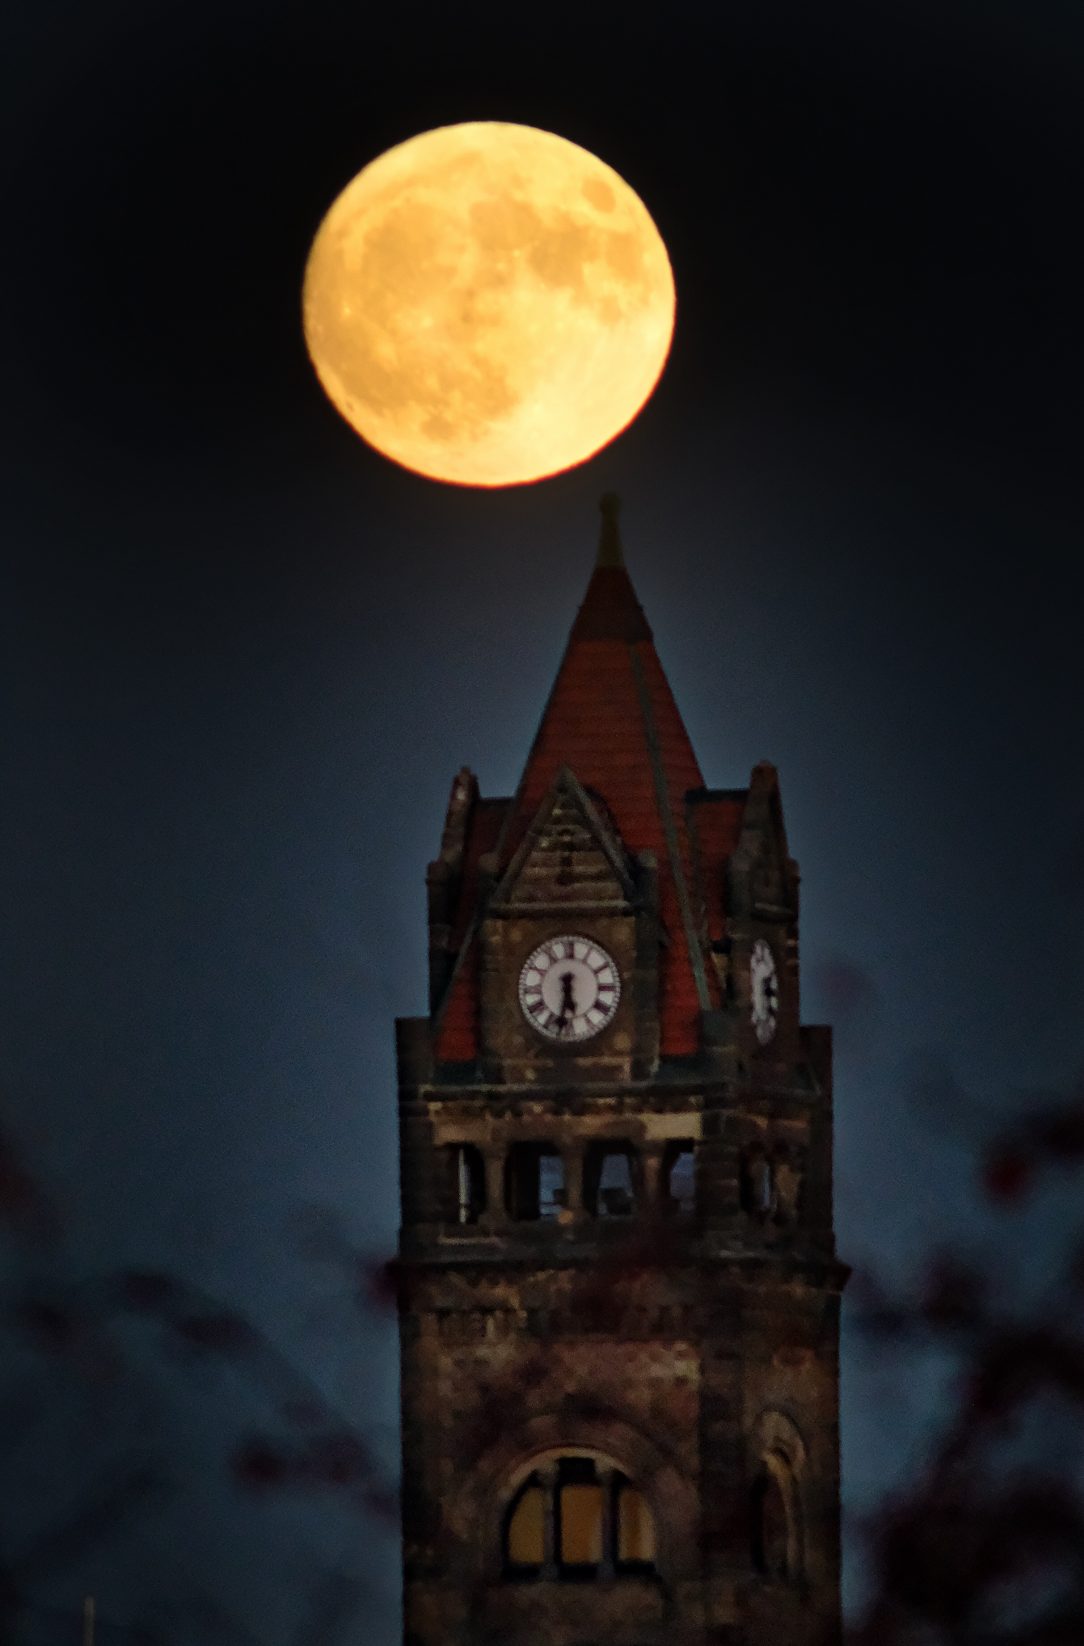 City hall tower under full moon